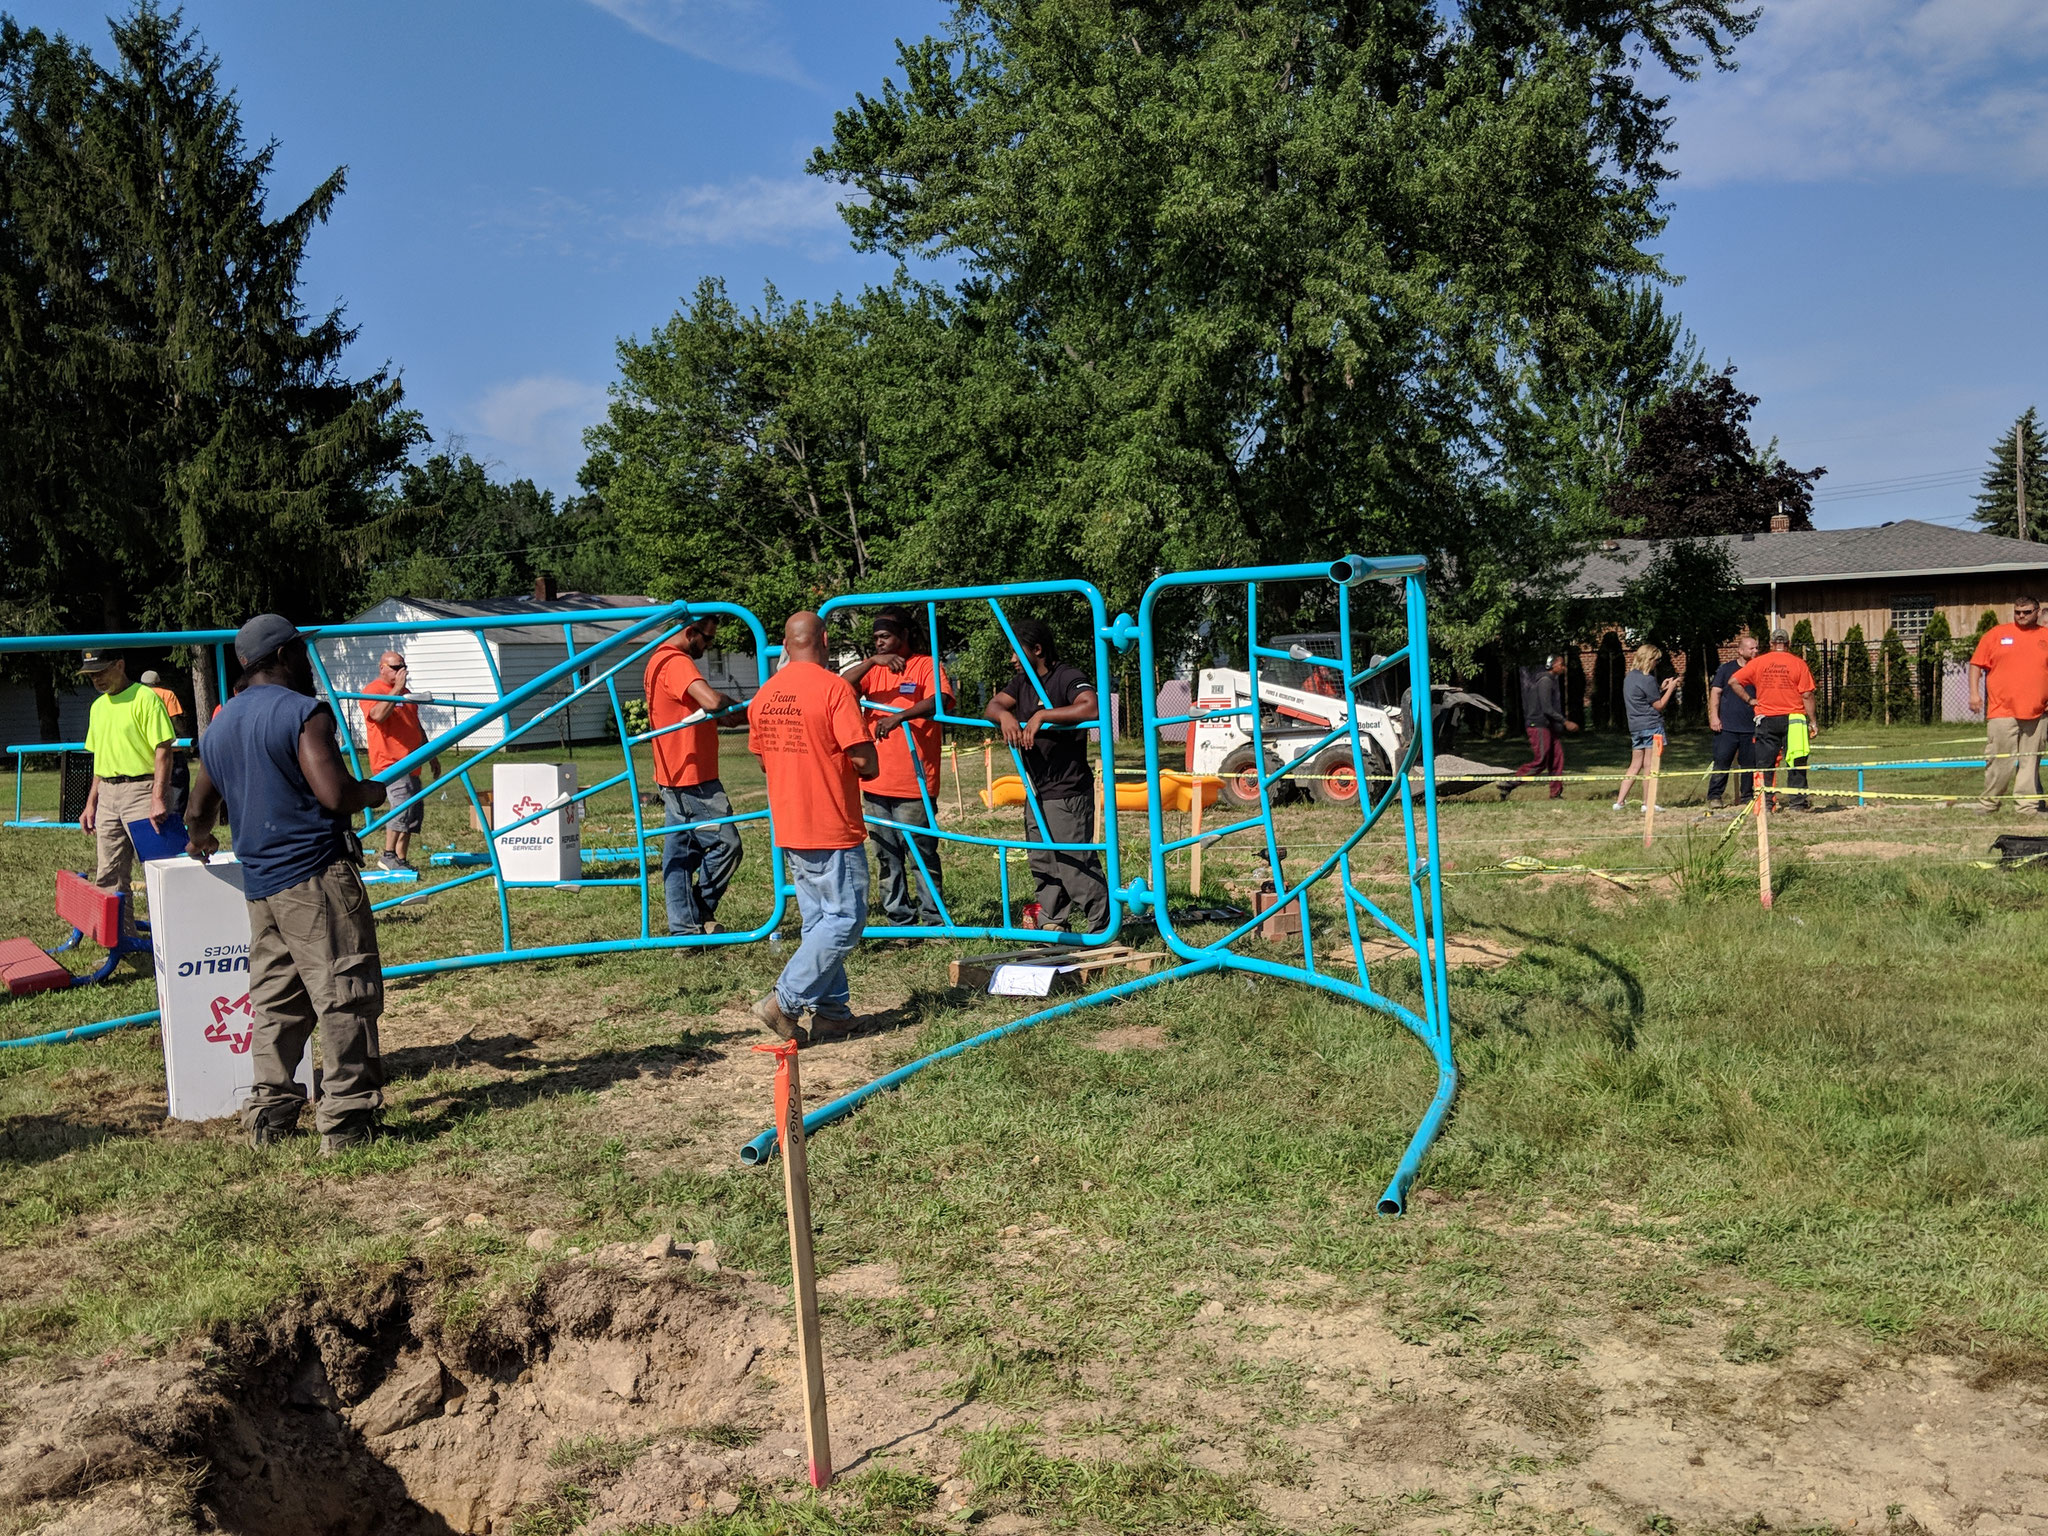 Over 90 community members volunteered to assemble equipment